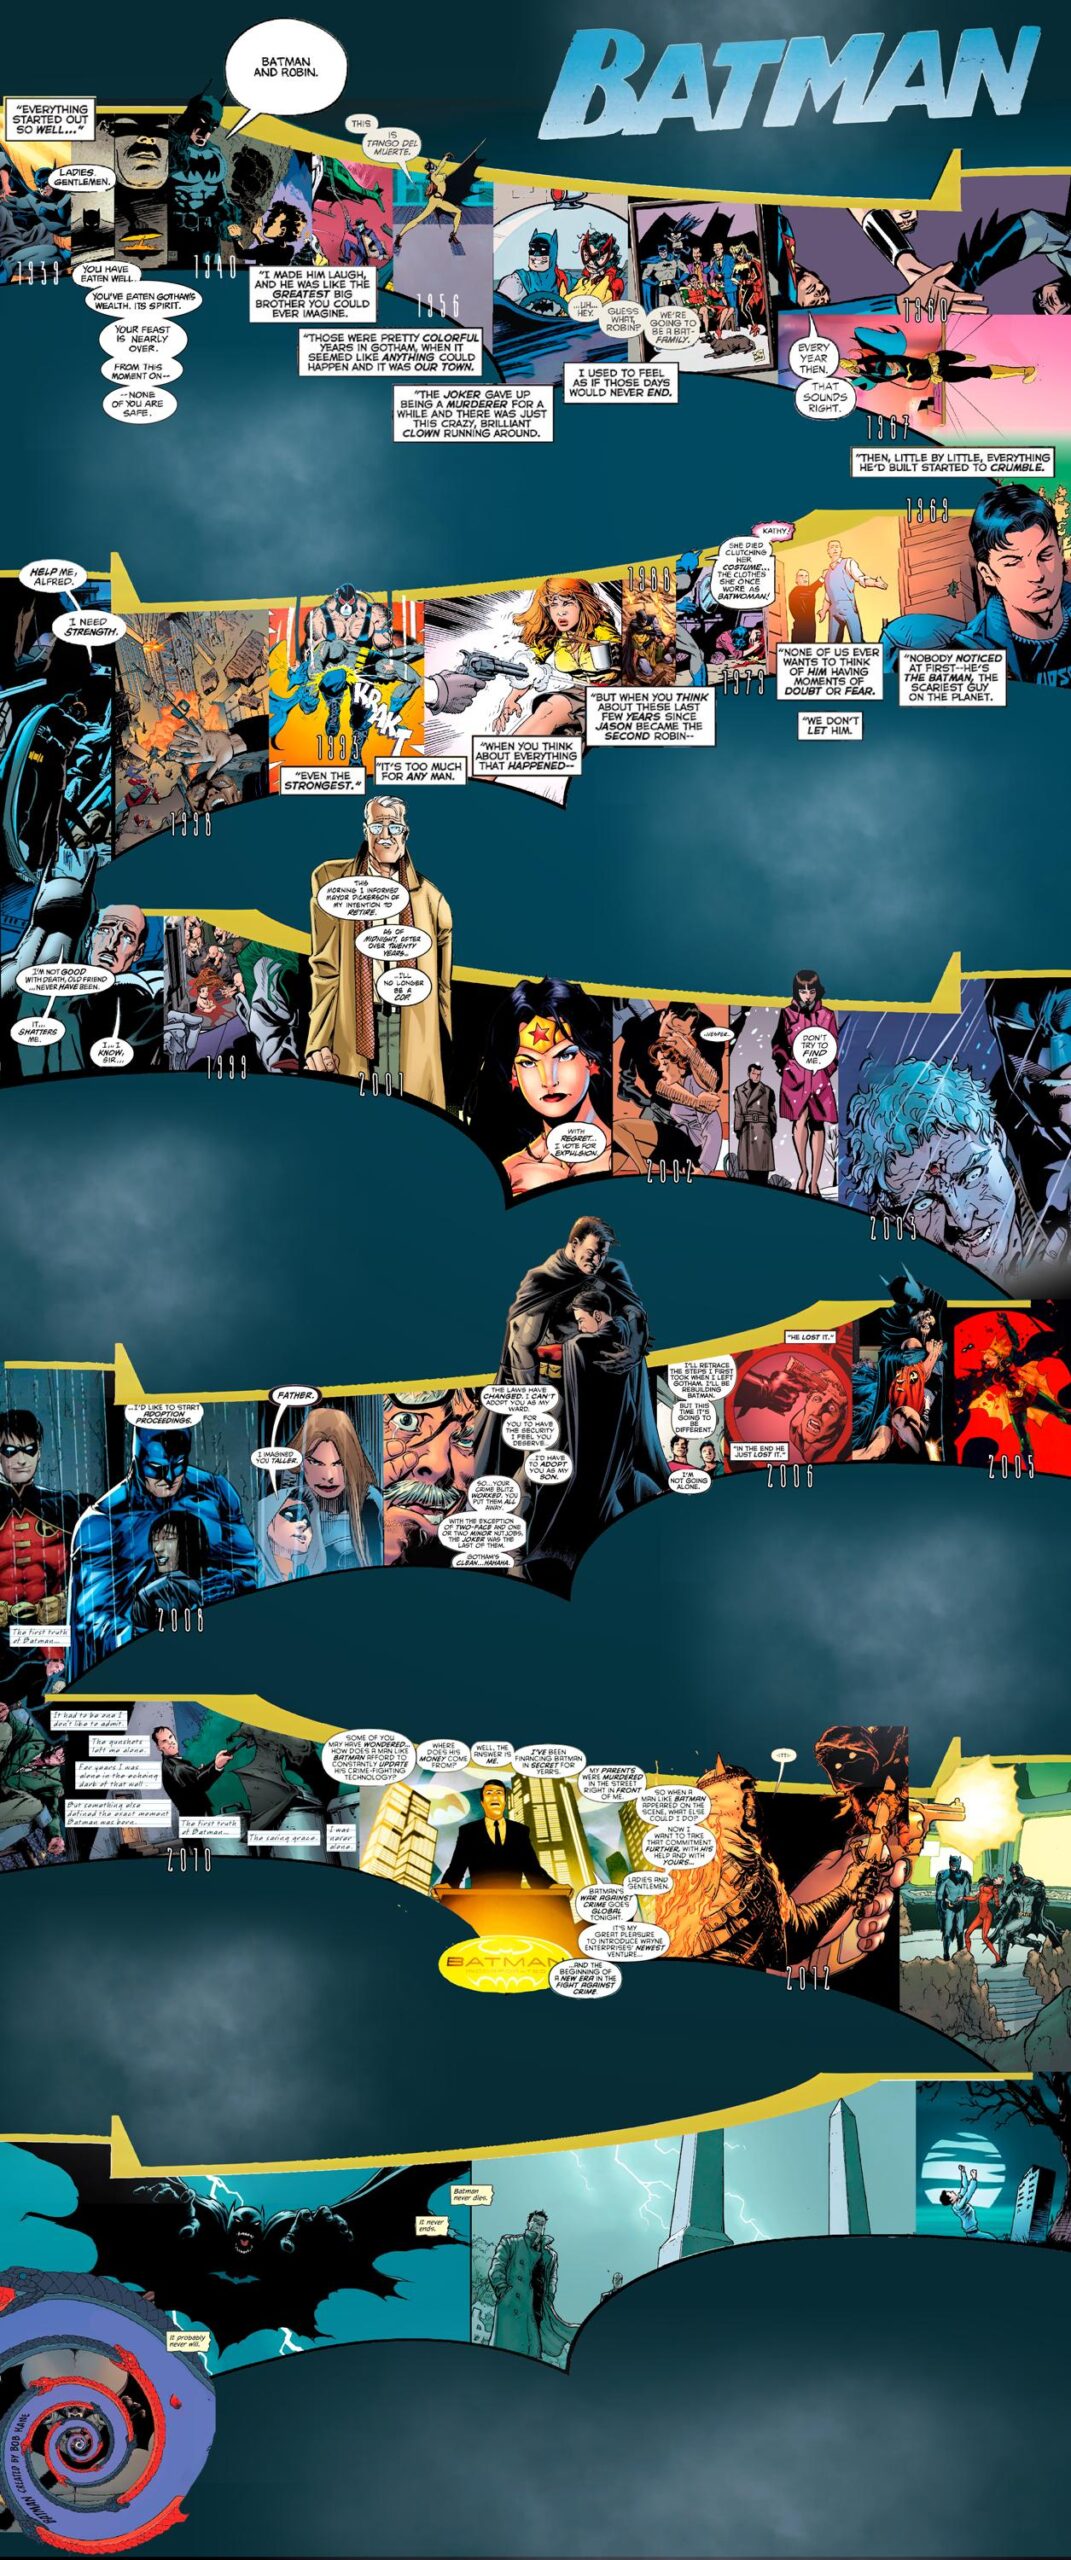 Batman Chronology Infographic | The Batman Chronology Project